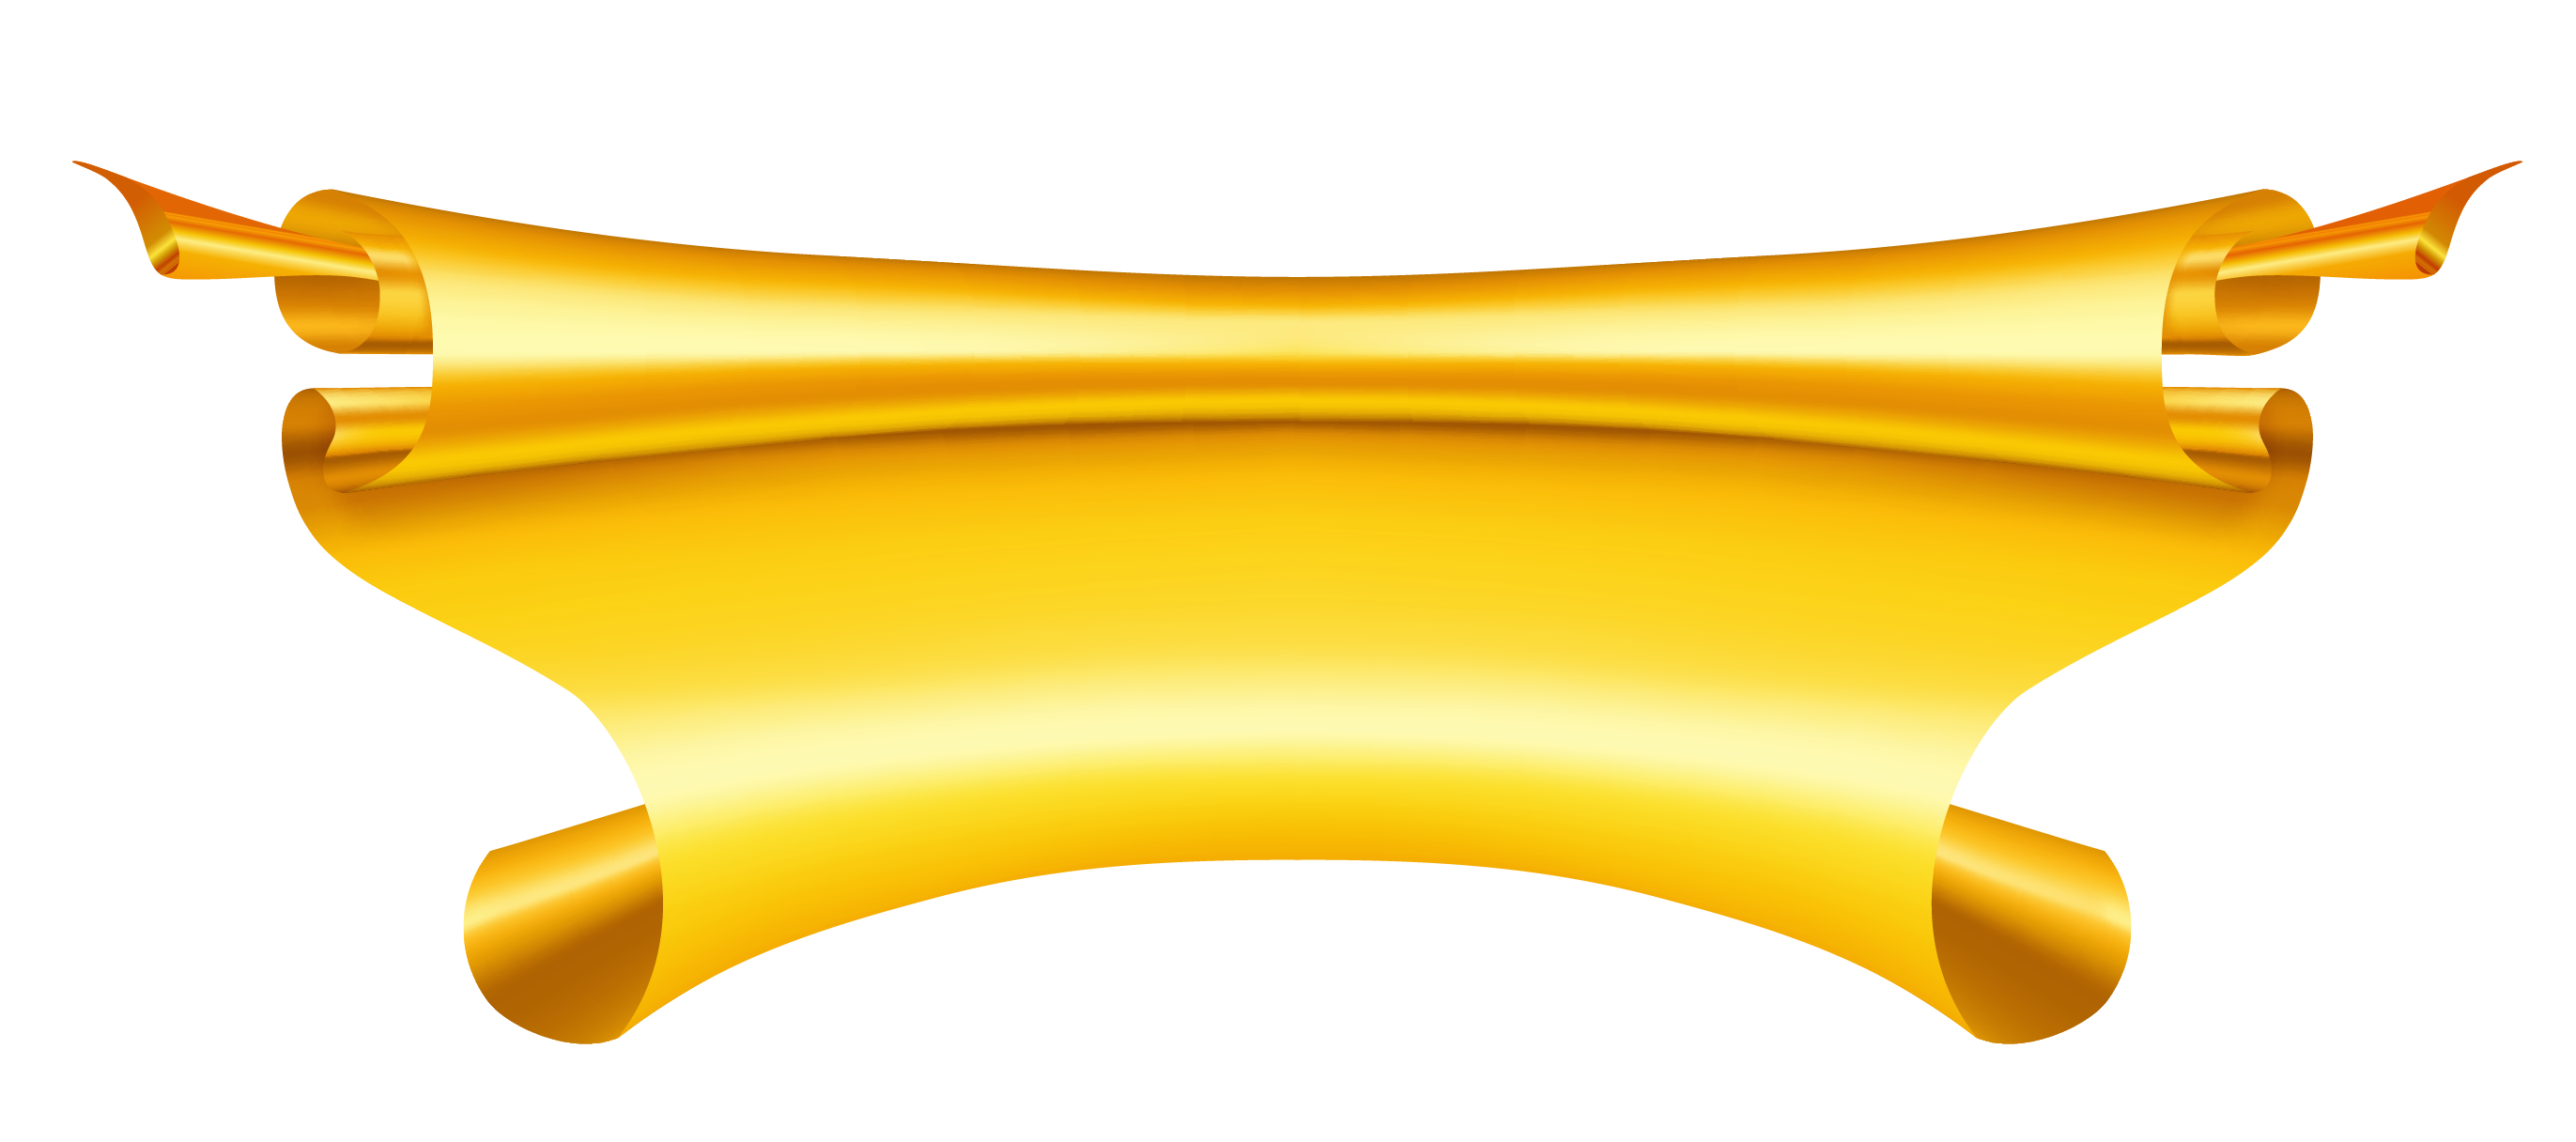 Gold ribbon clipart